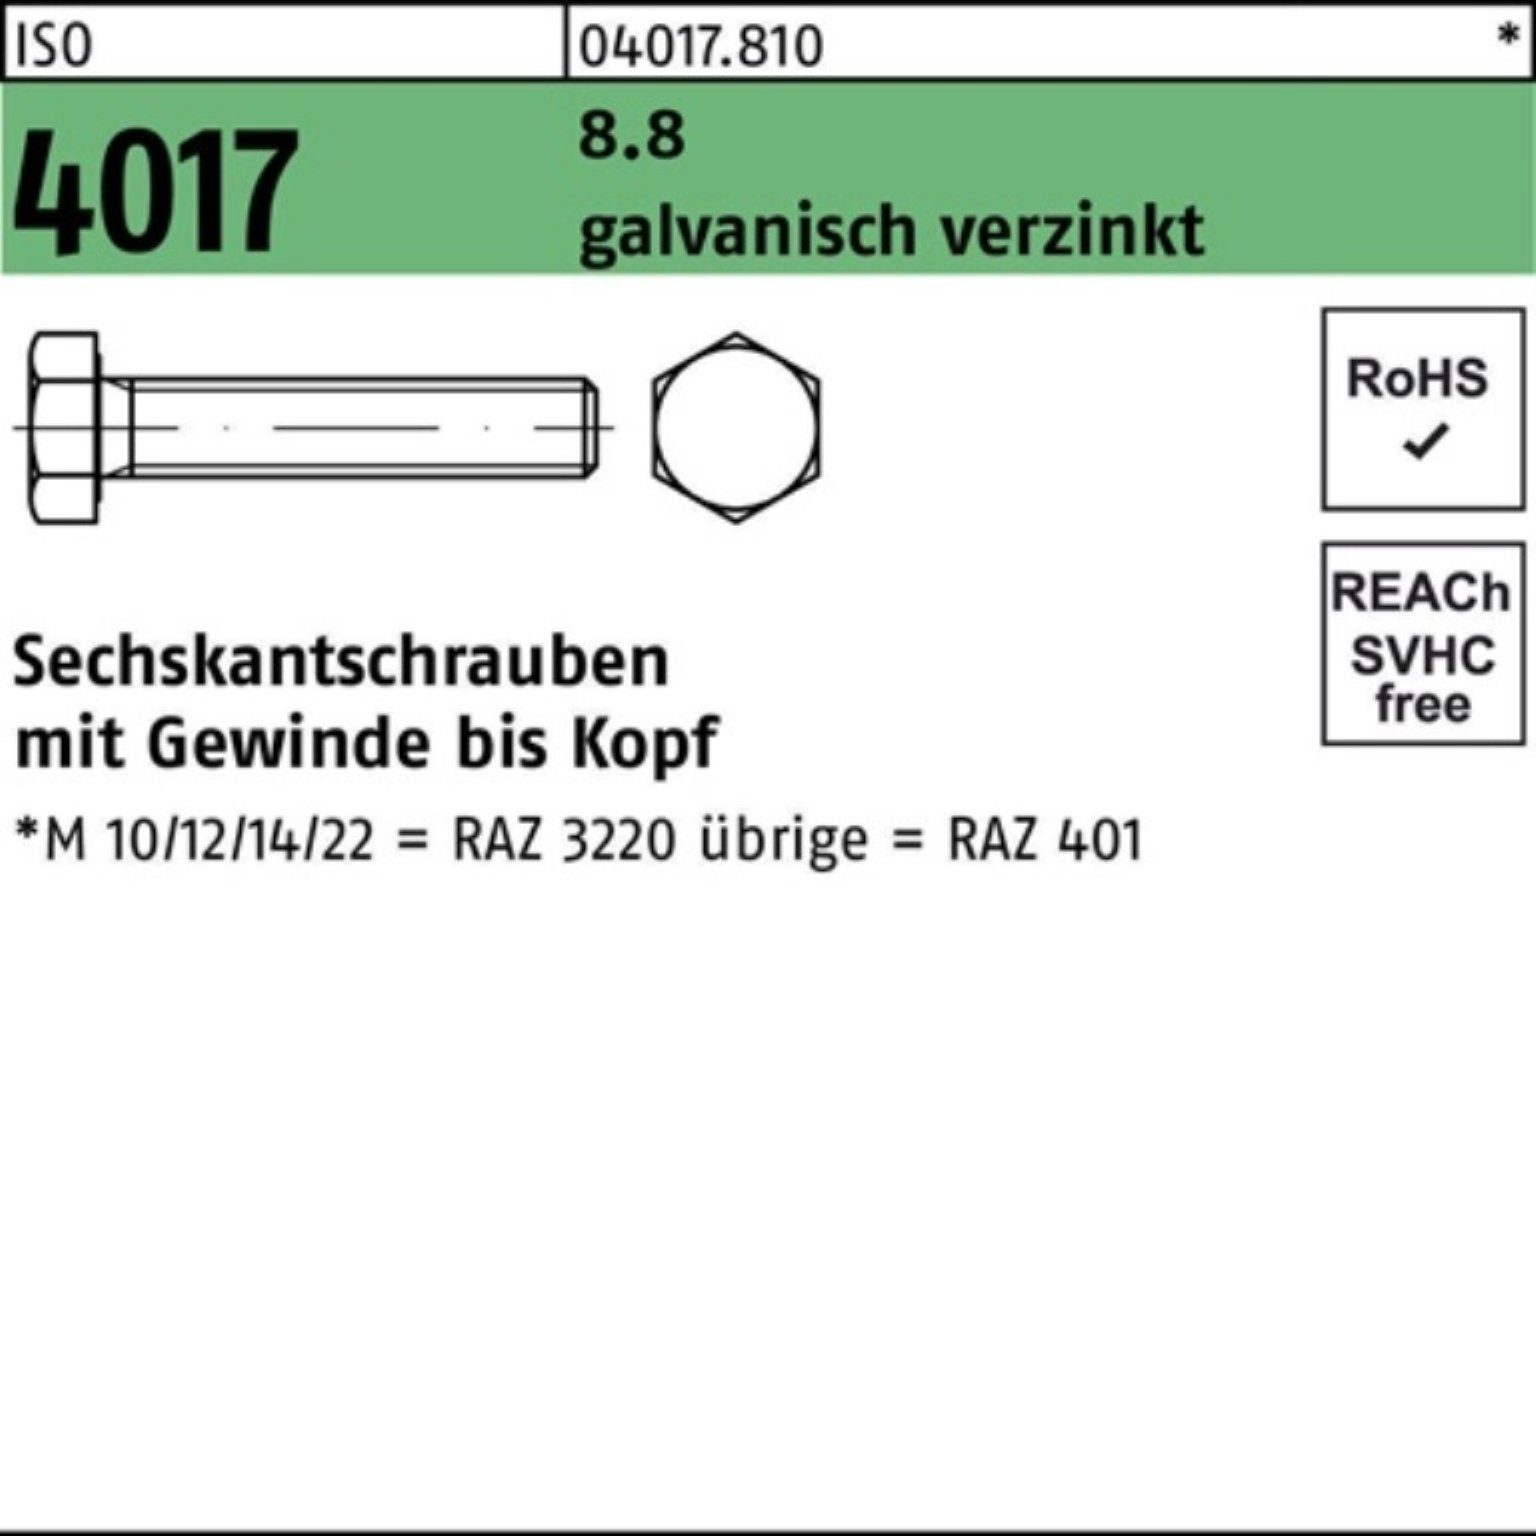 VG St M18x Pack Sechskantschraube Sechskantschraube Bufab 8.8 galv.verz. 90 4017 25 ISO 100er